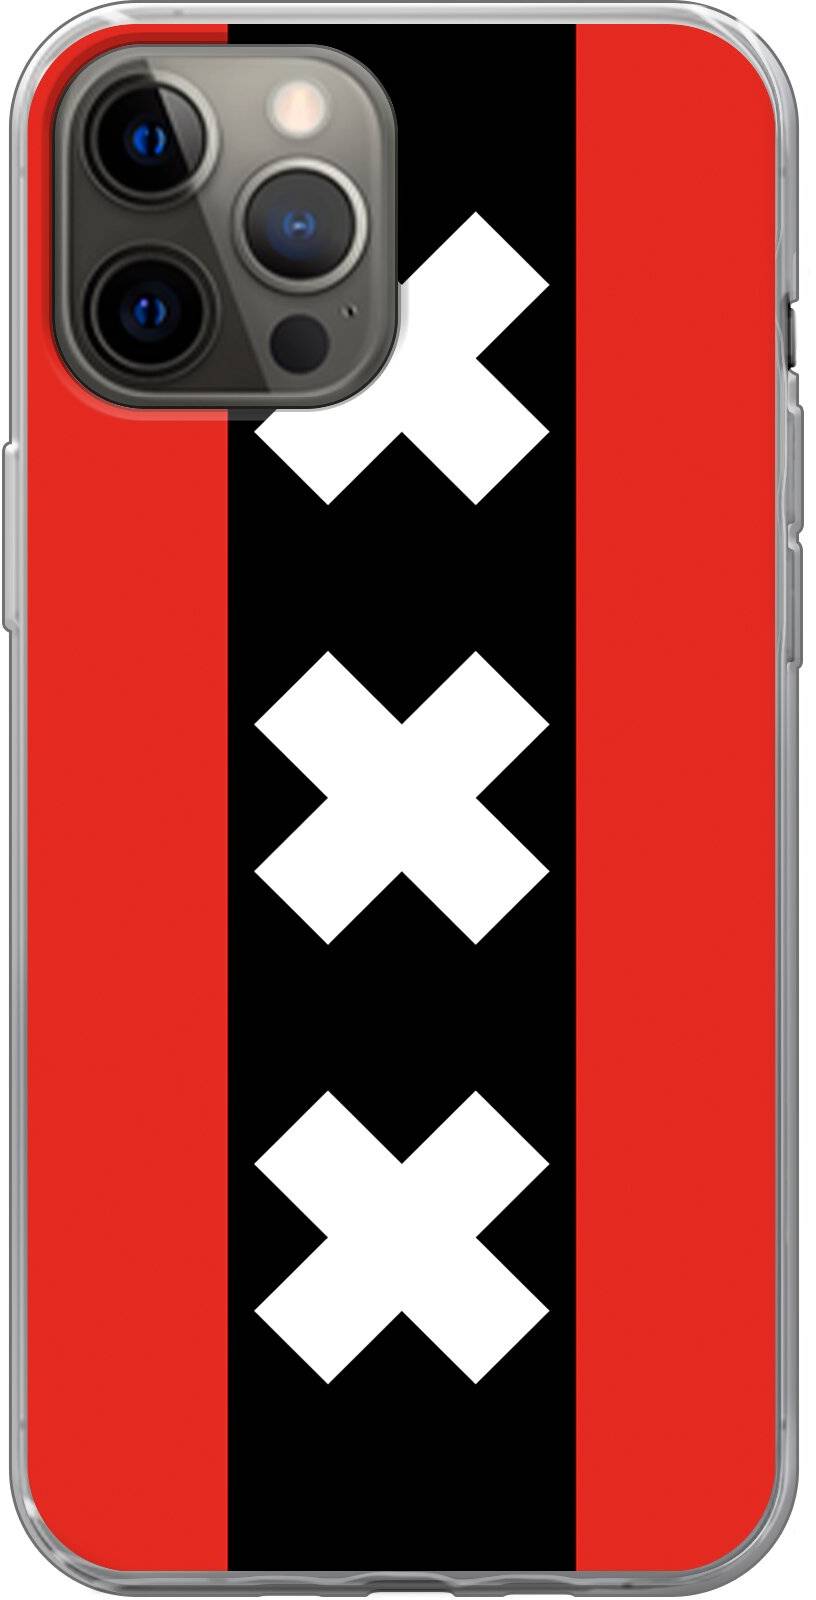 Amsterdamse vlag iPhone 12 Pro Max